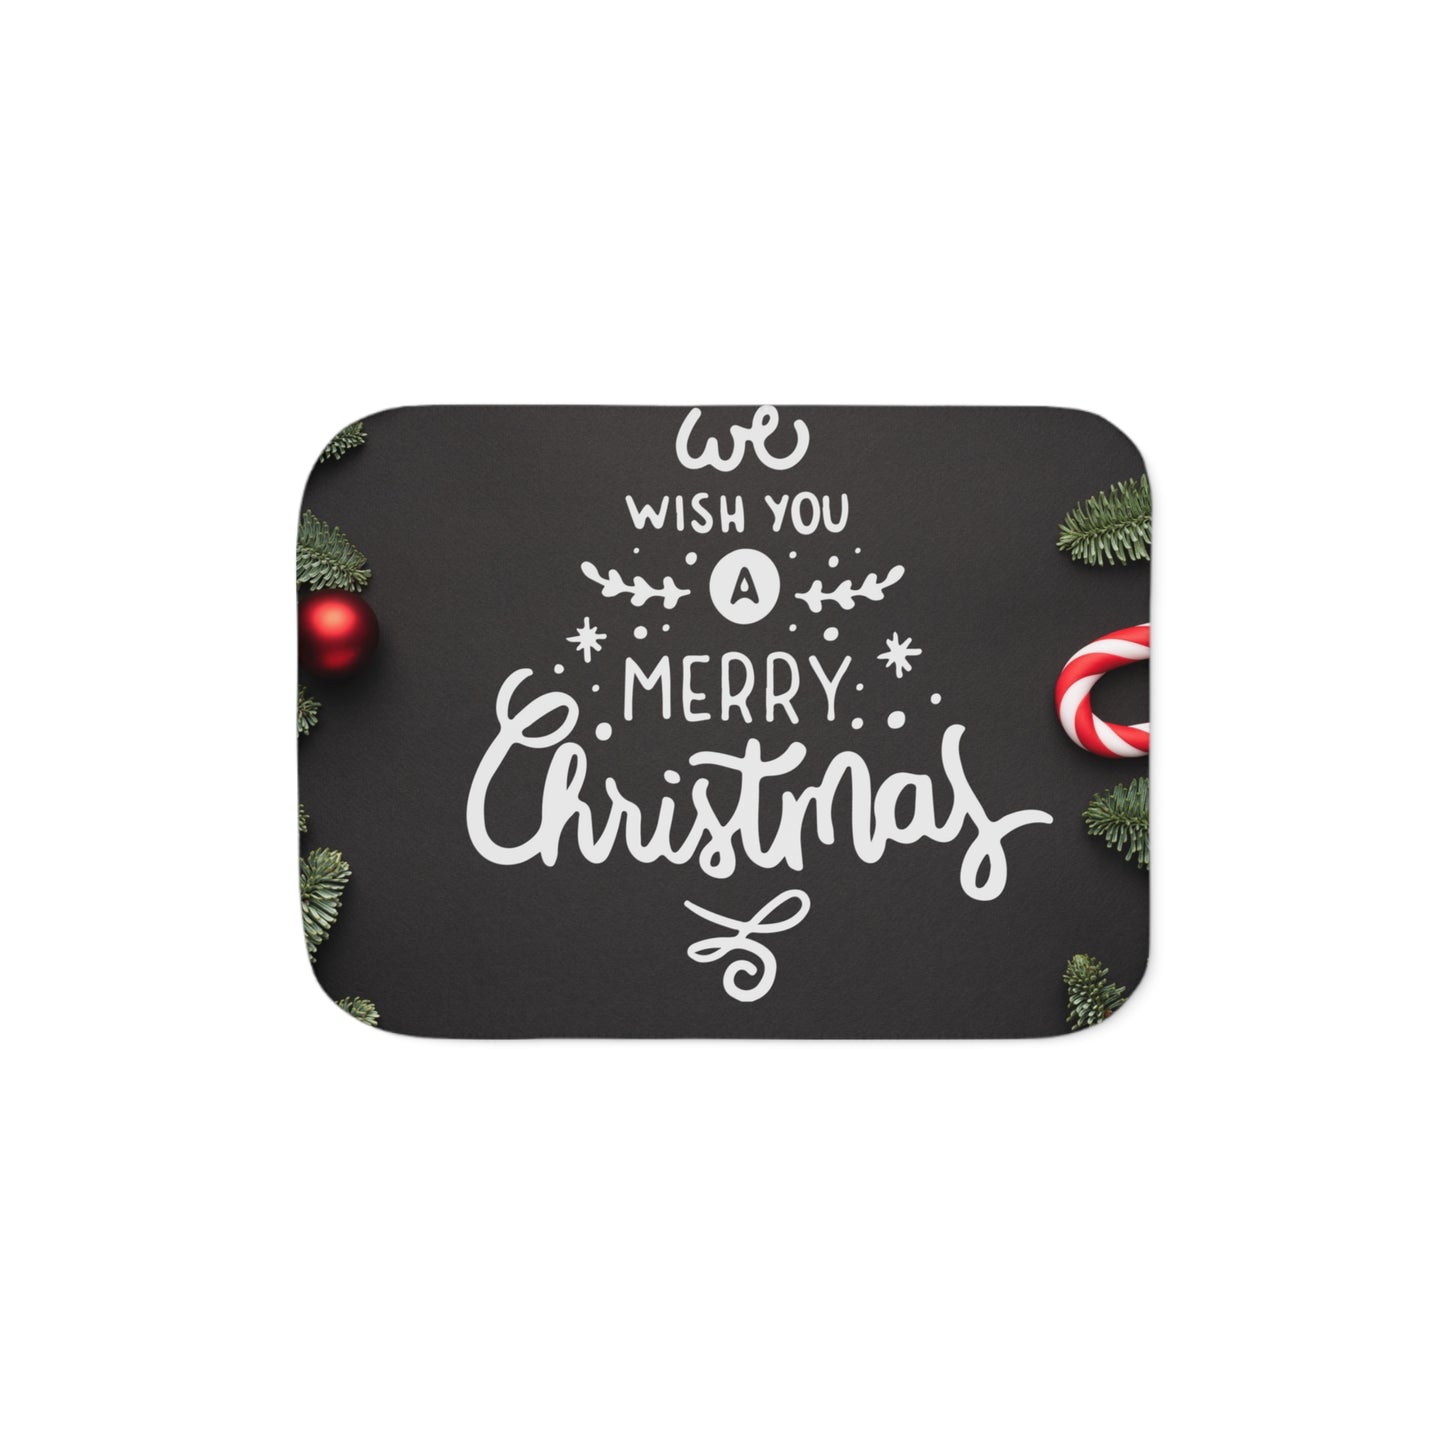 Wish You Merry Christmas in Black Printed Sherpa Blanket